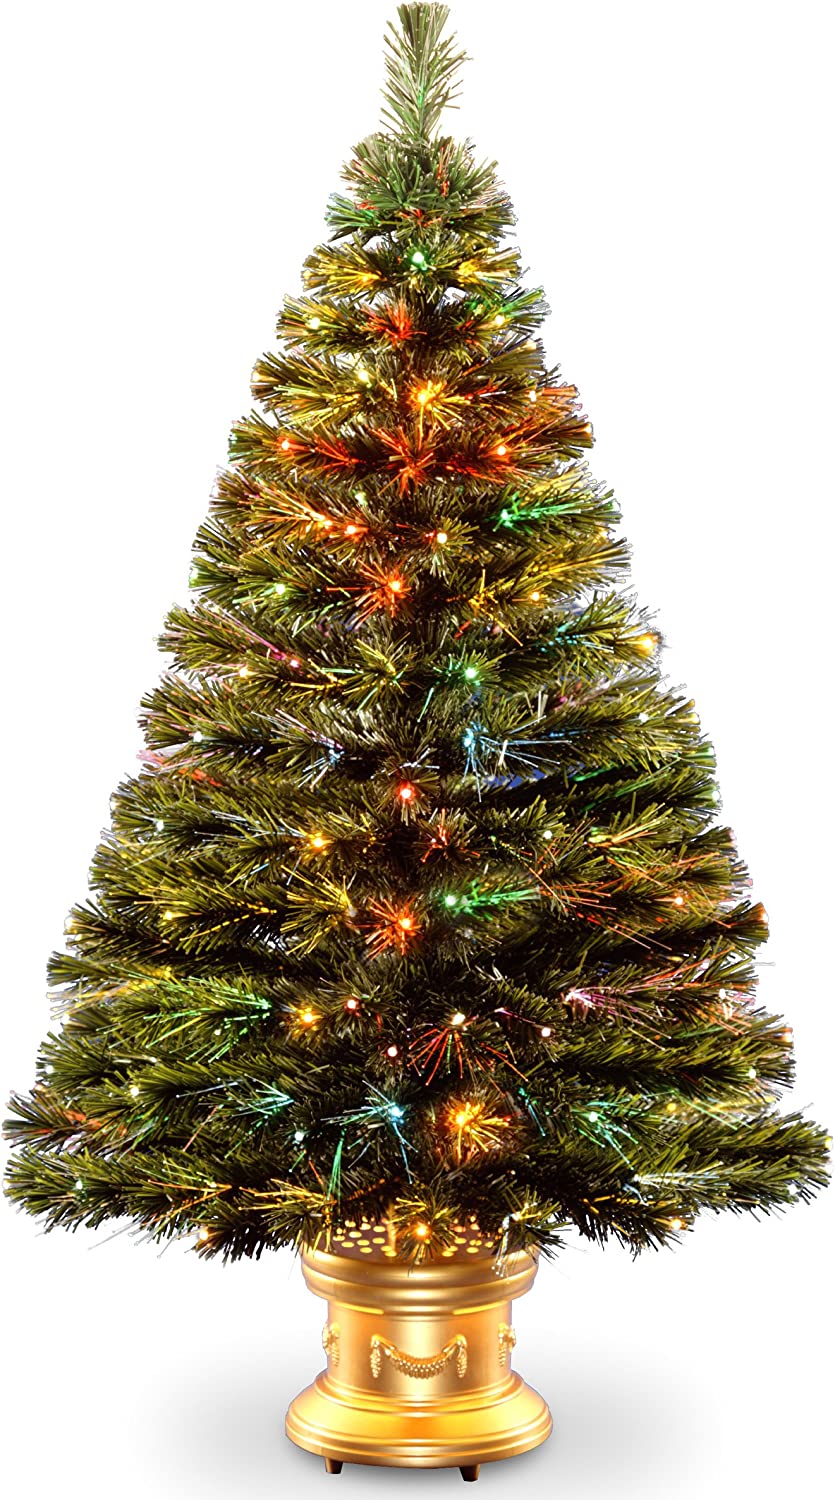  8. National Gold Base Fiber Optic Christmas Trees 